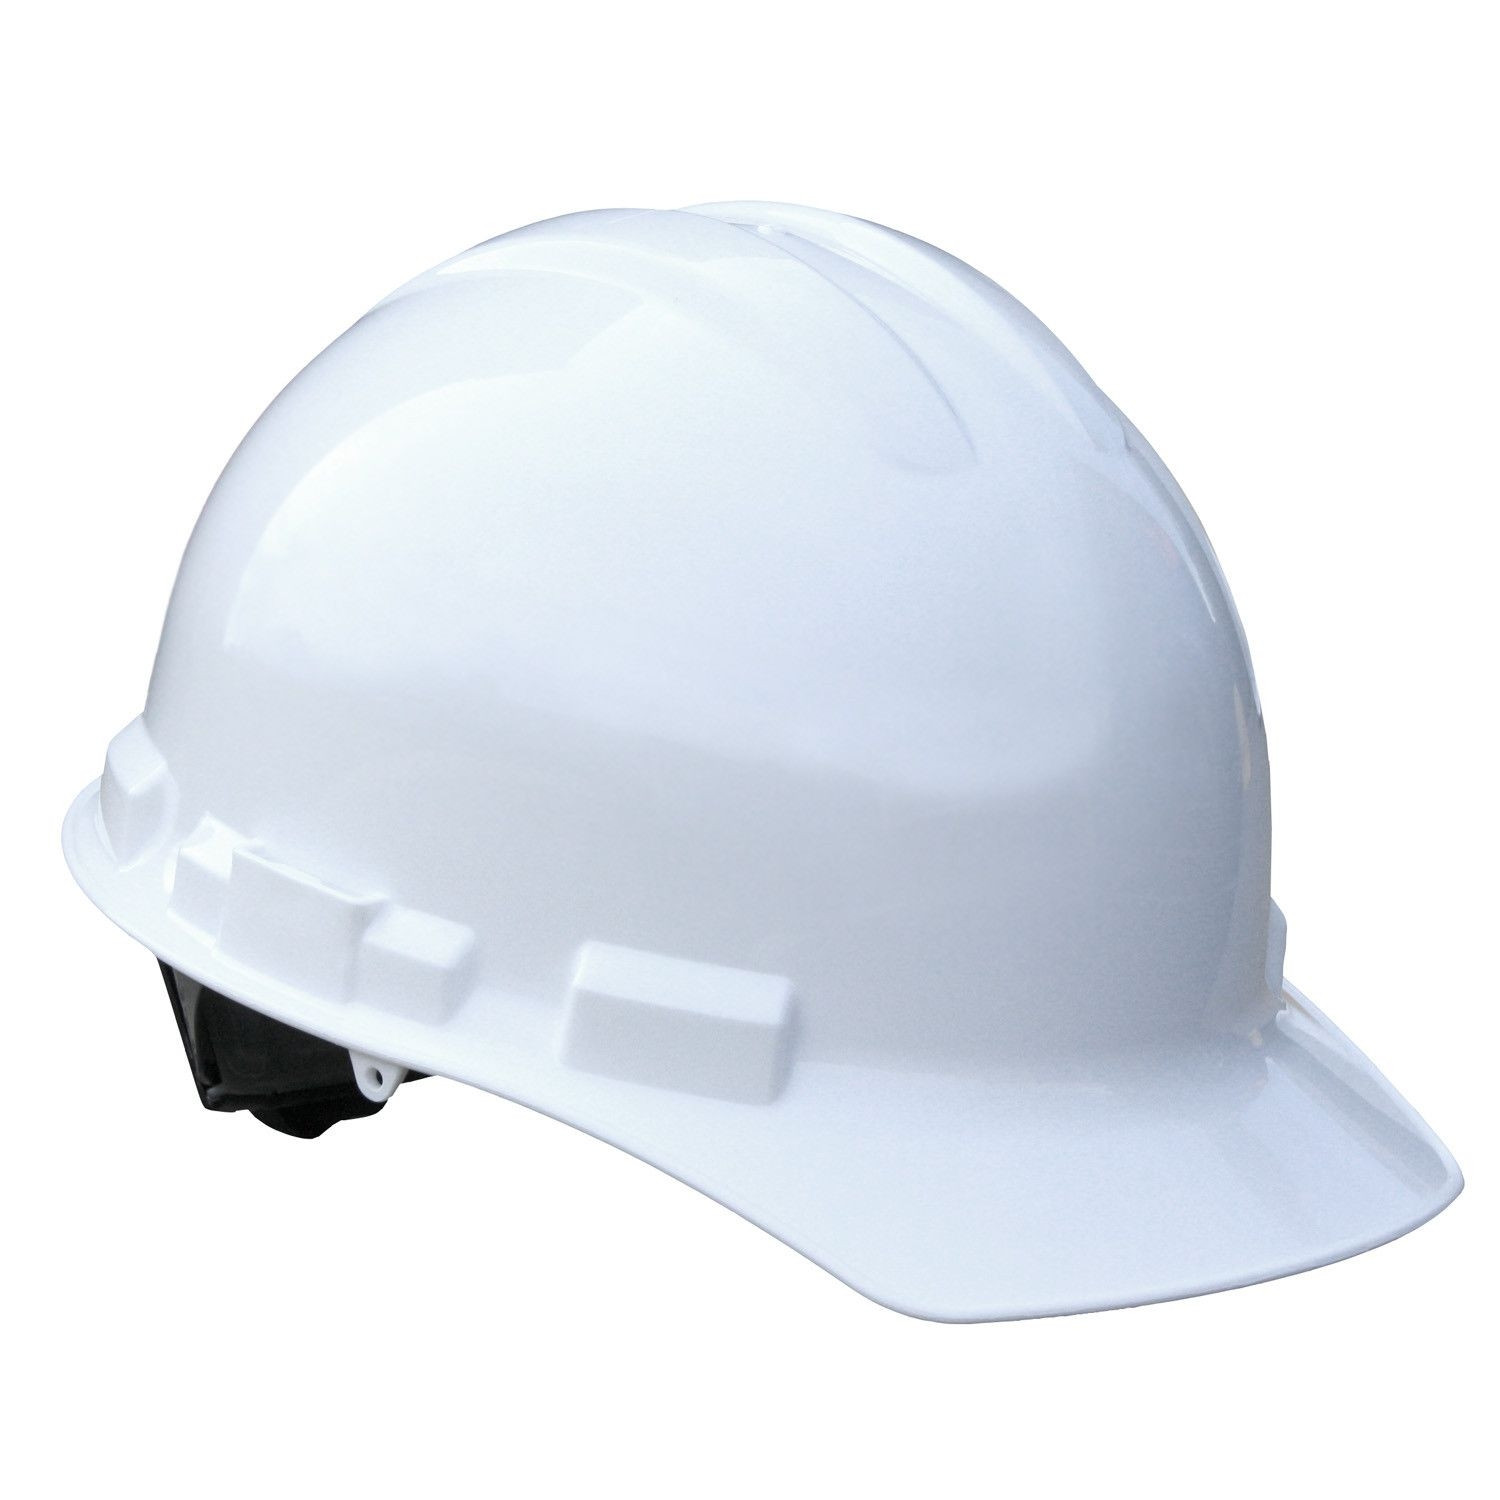 Granite Cap Style Hard Hat (White, 4-Point Suspension)